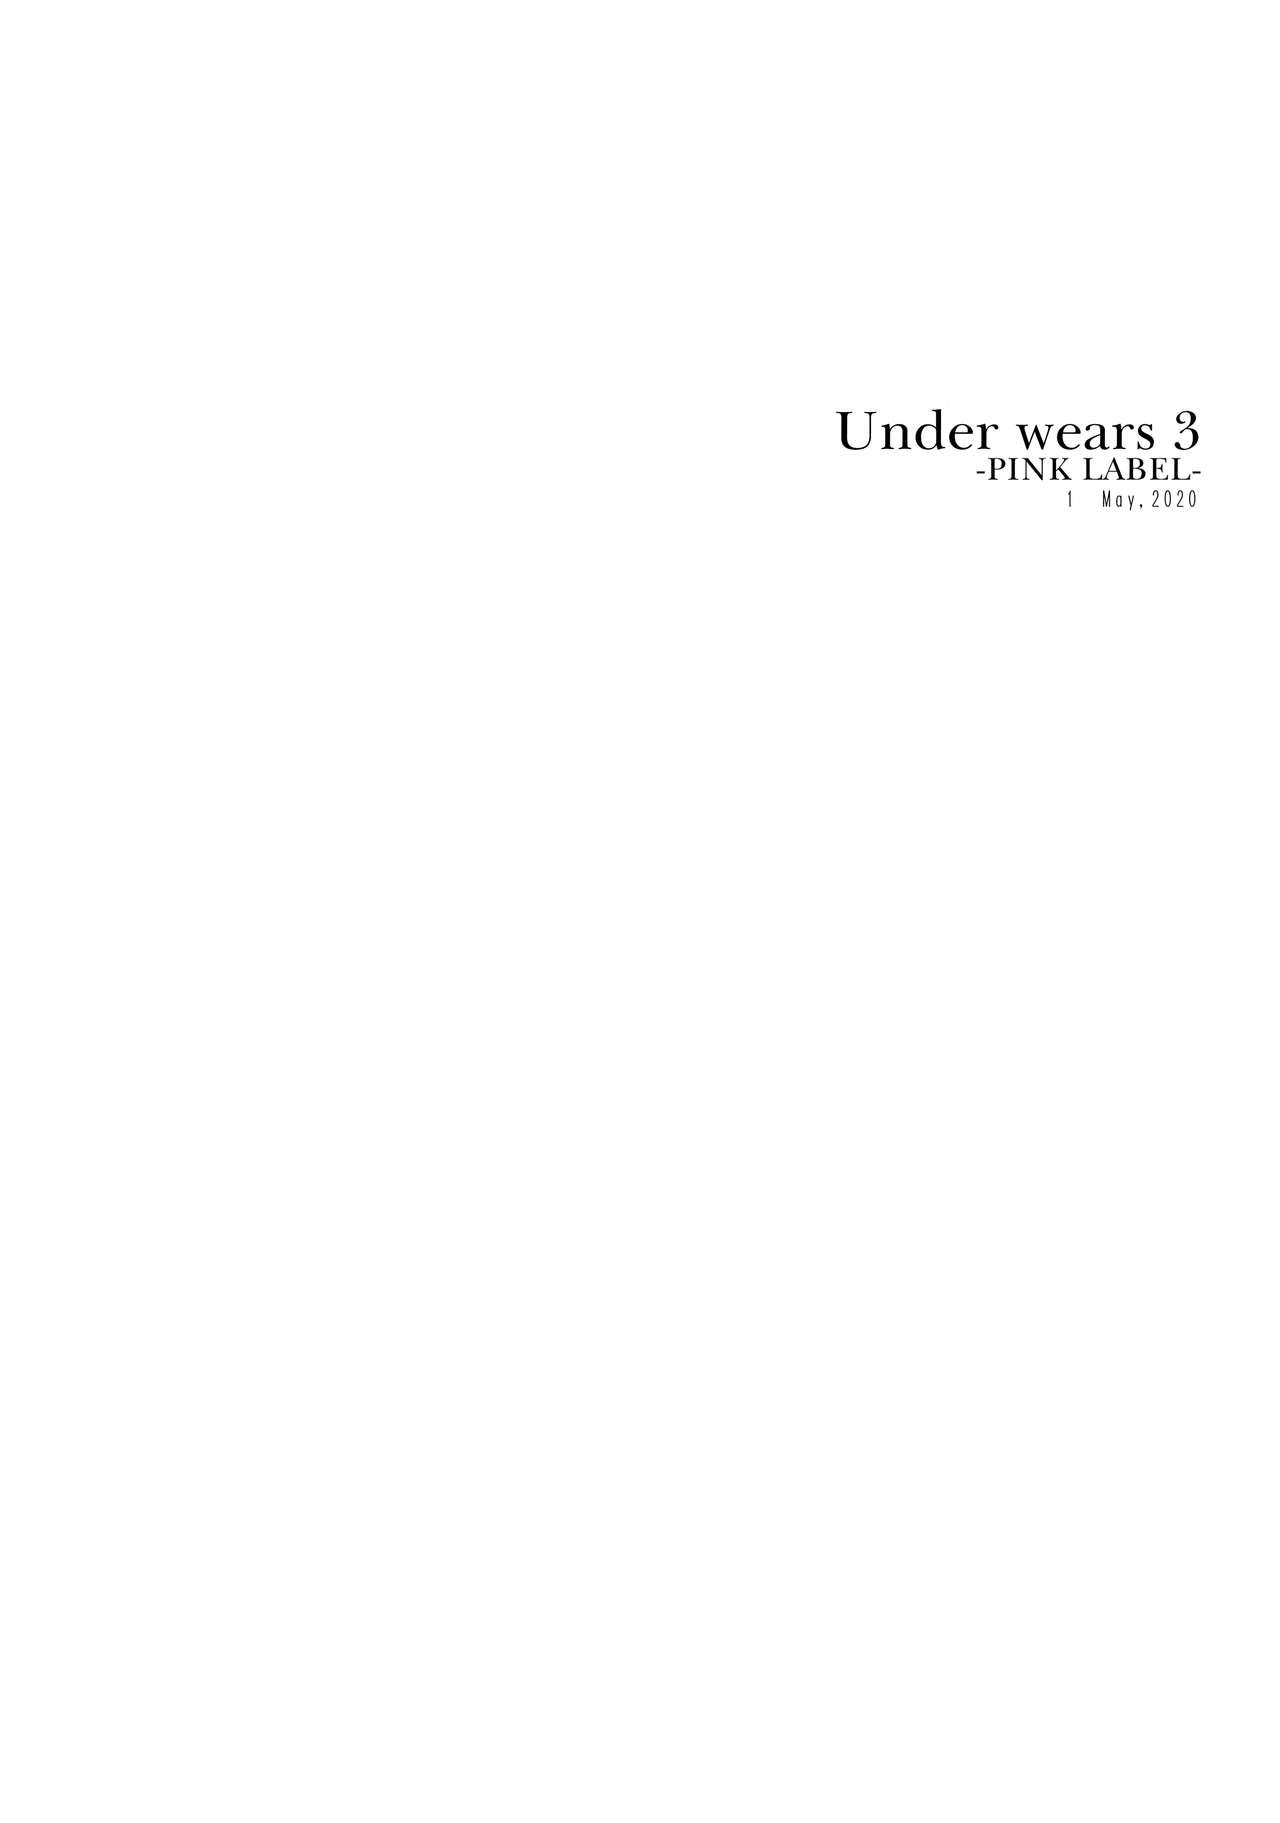 URIBOU Zakka Ten Pants Tokkagata Gashuu「Under wears 3 PINK LABEL」 1